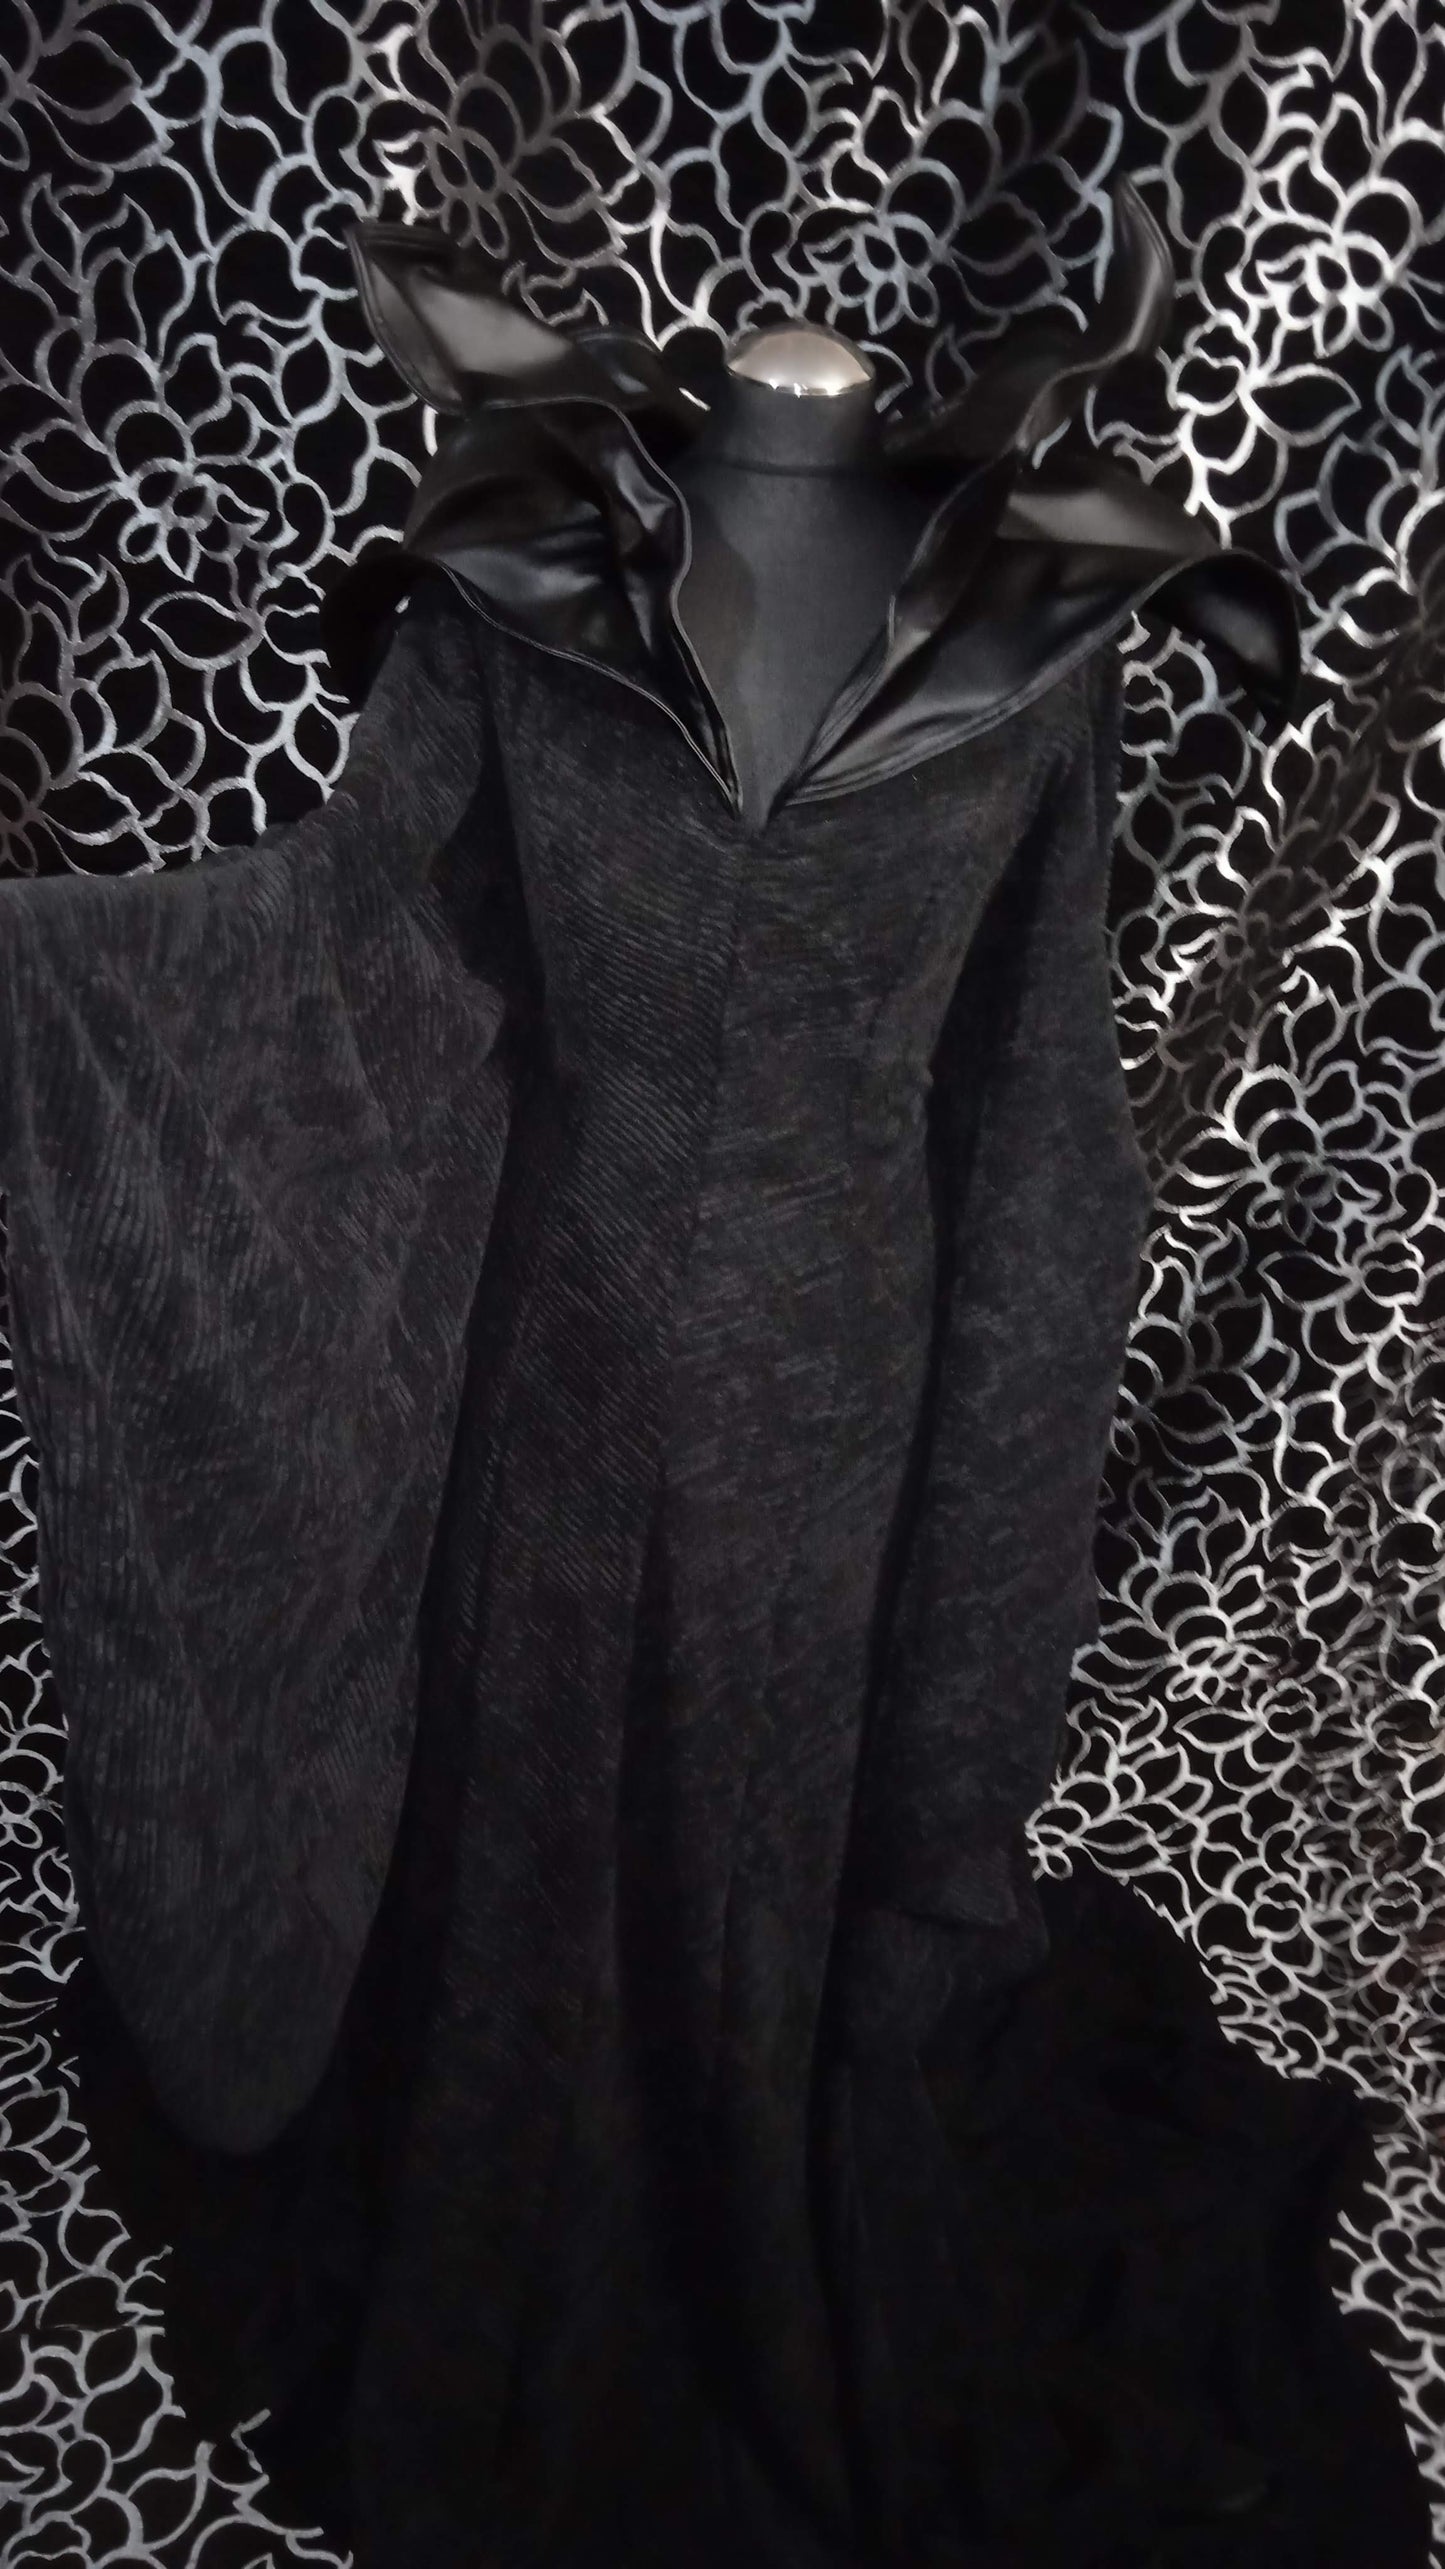 Maleficent cosplay dress handmade